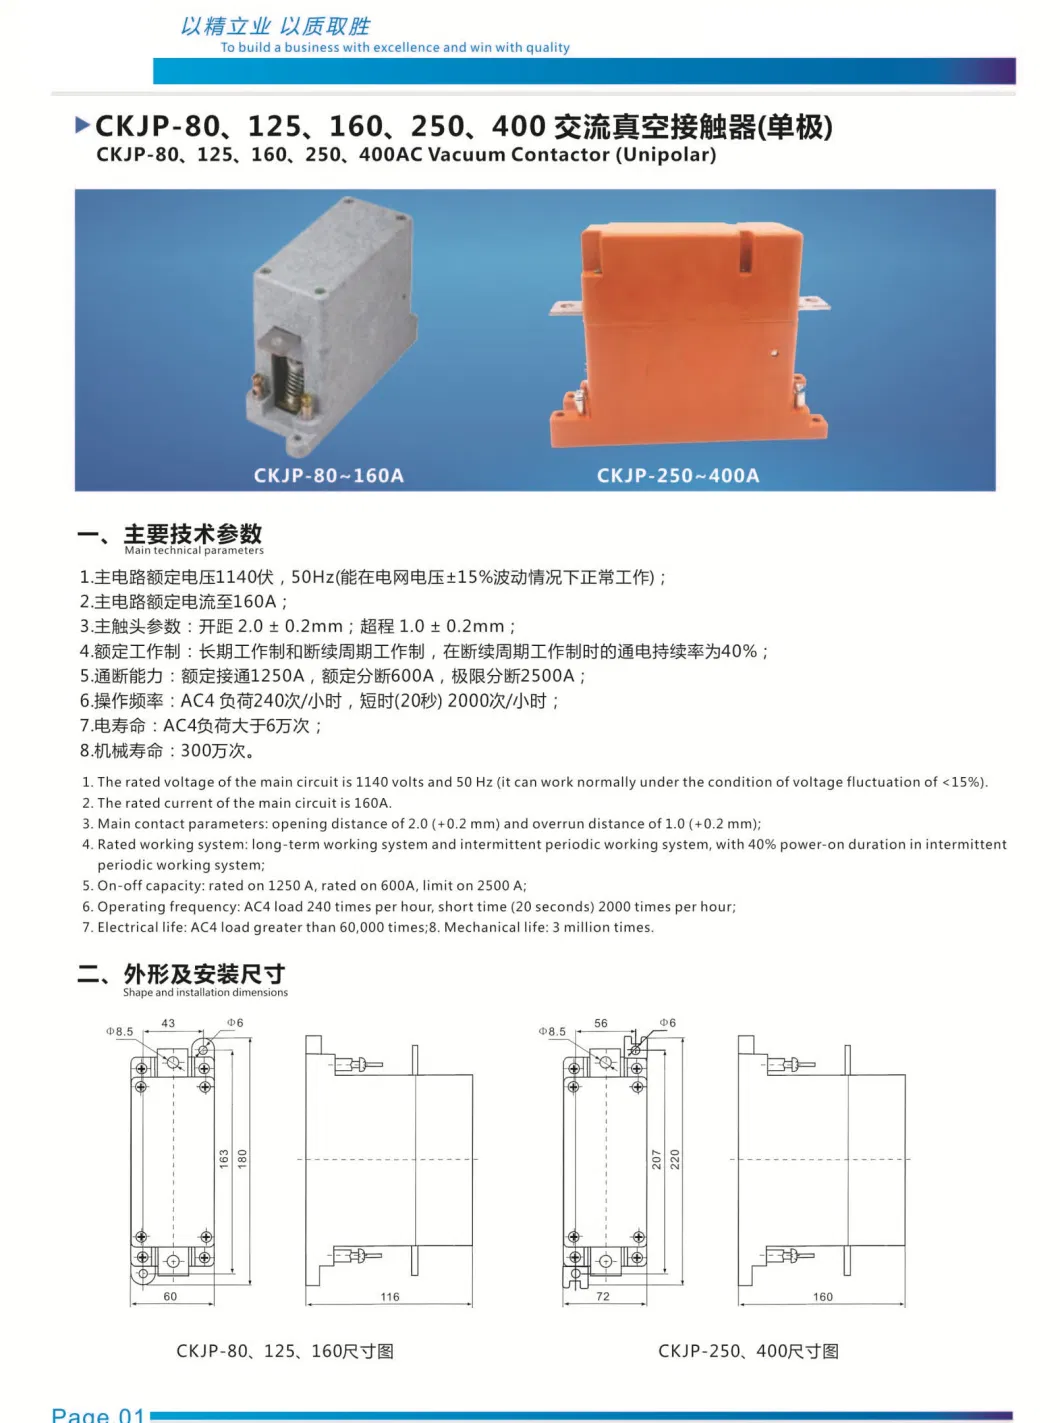 Middle Low Voltage Single Pole AC Vacuum Contactor (CKJP-400)